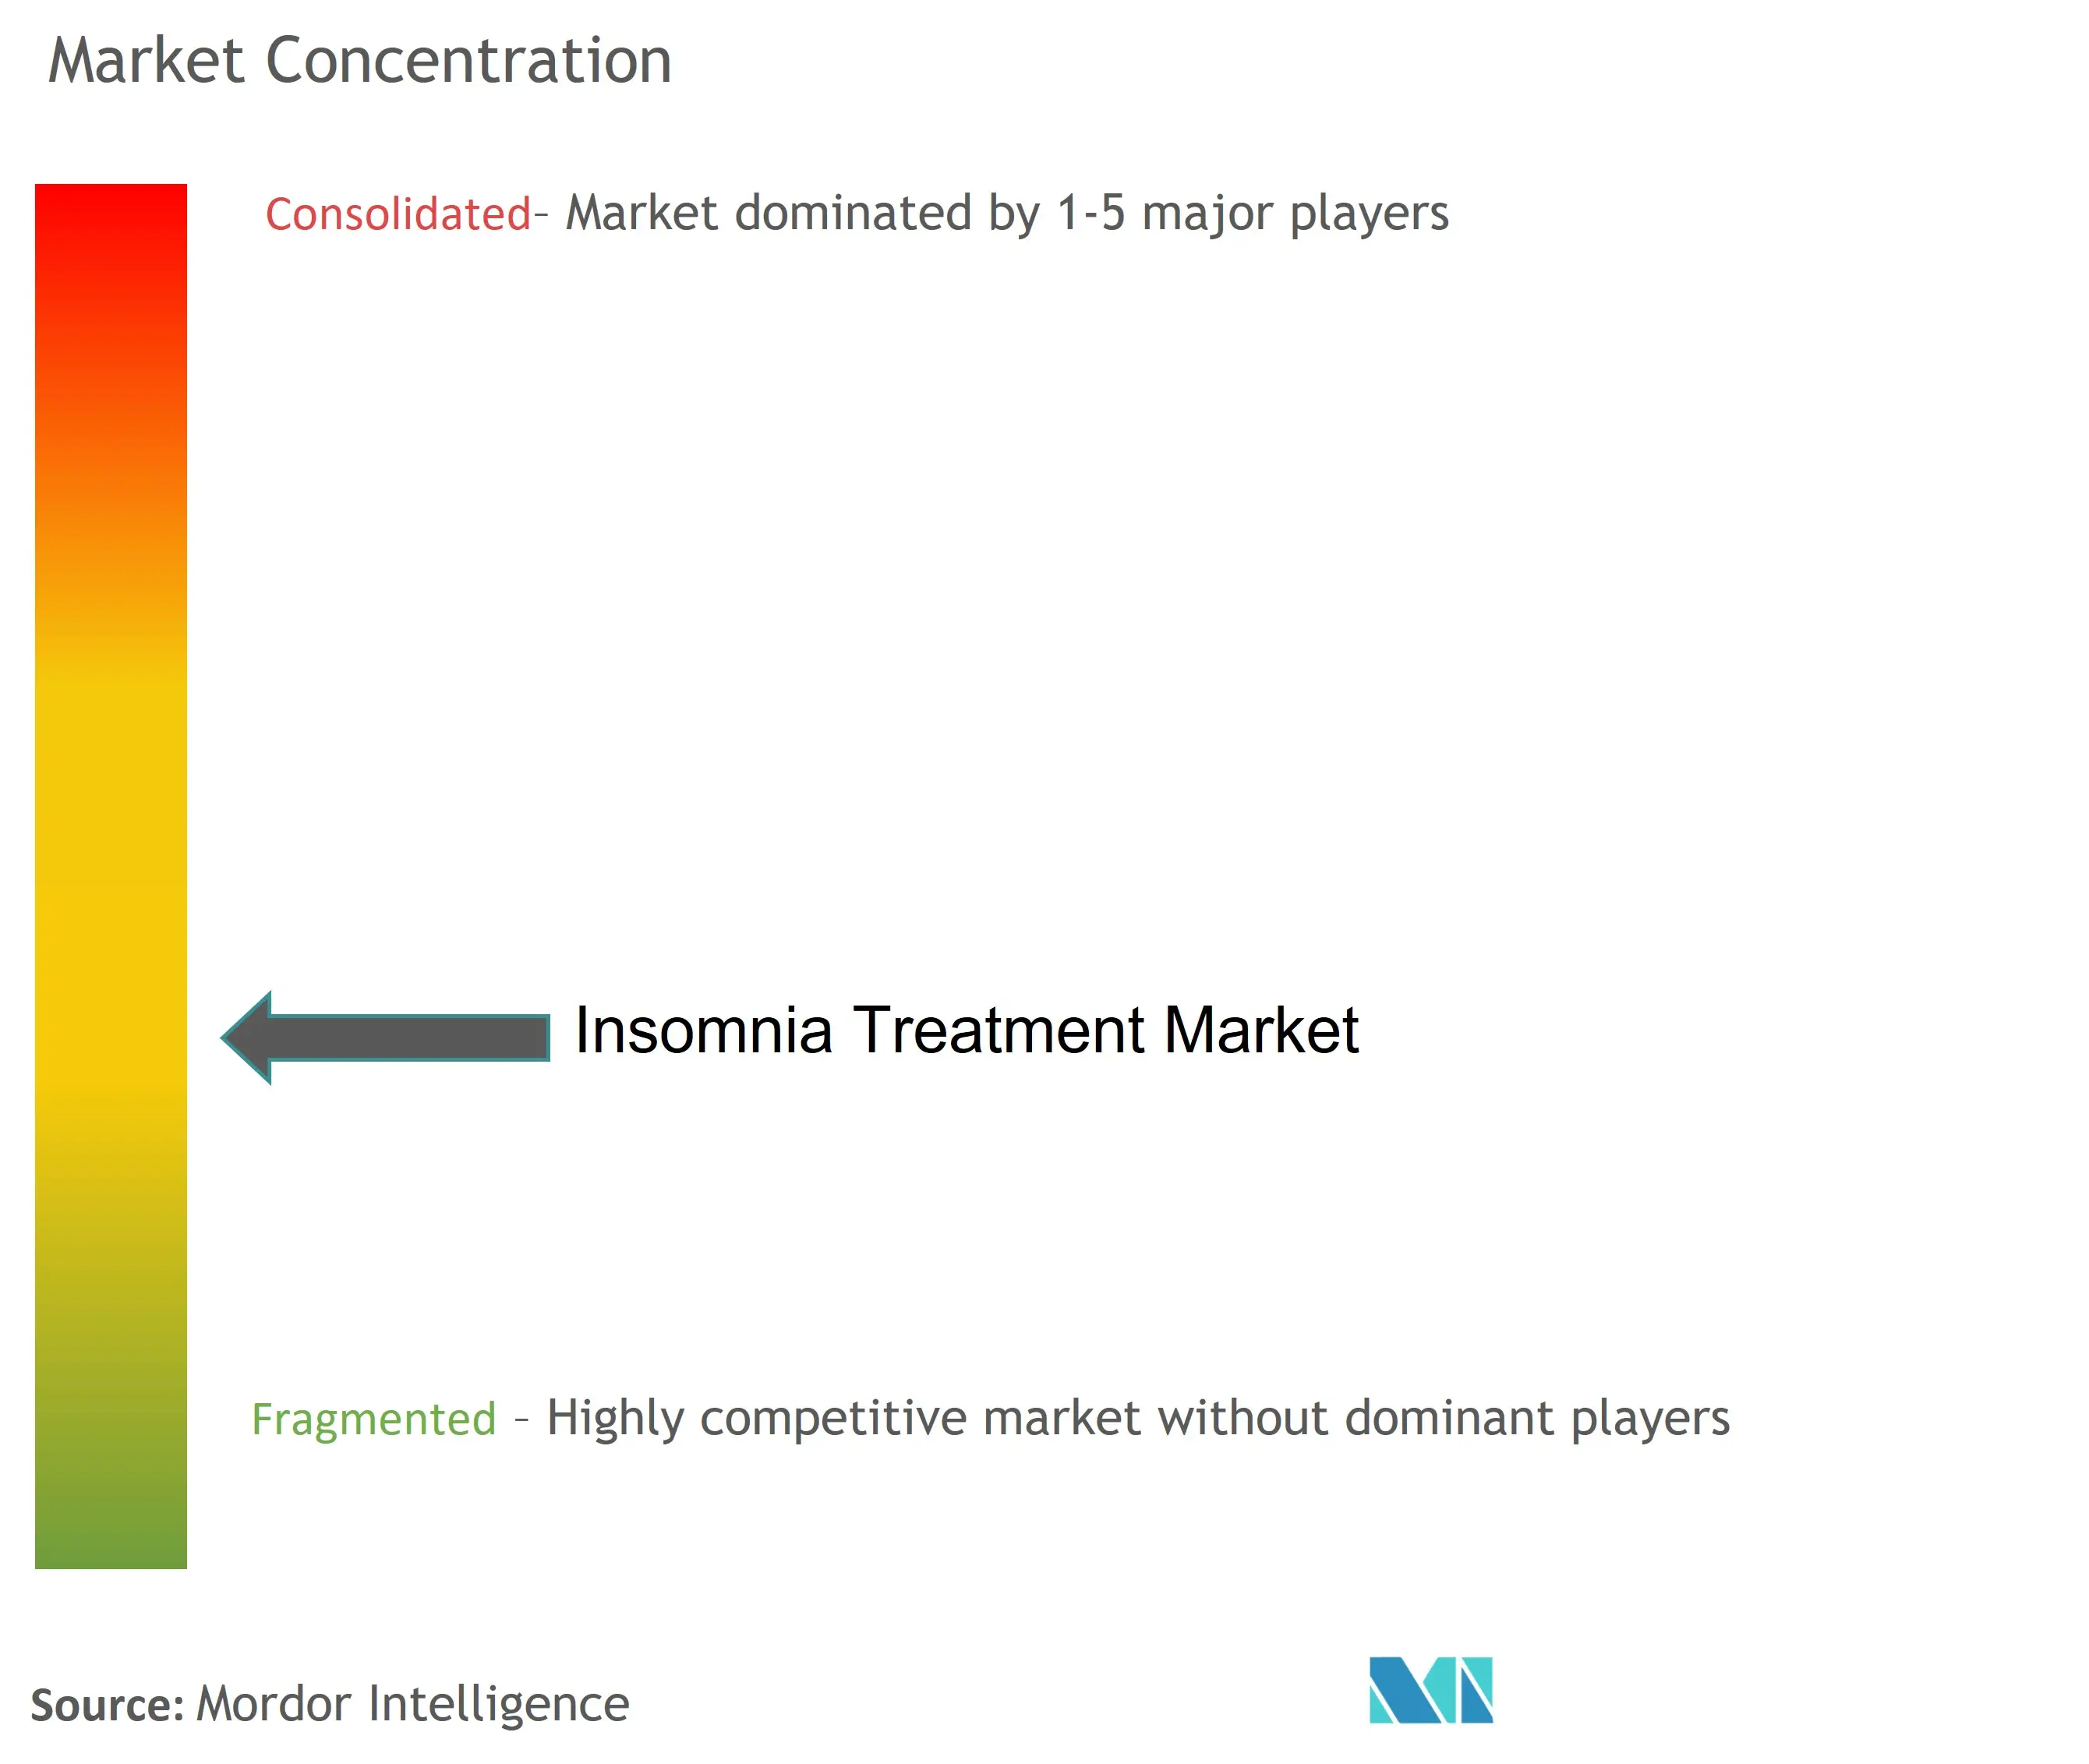 Insomnia Treatment Market Concentration